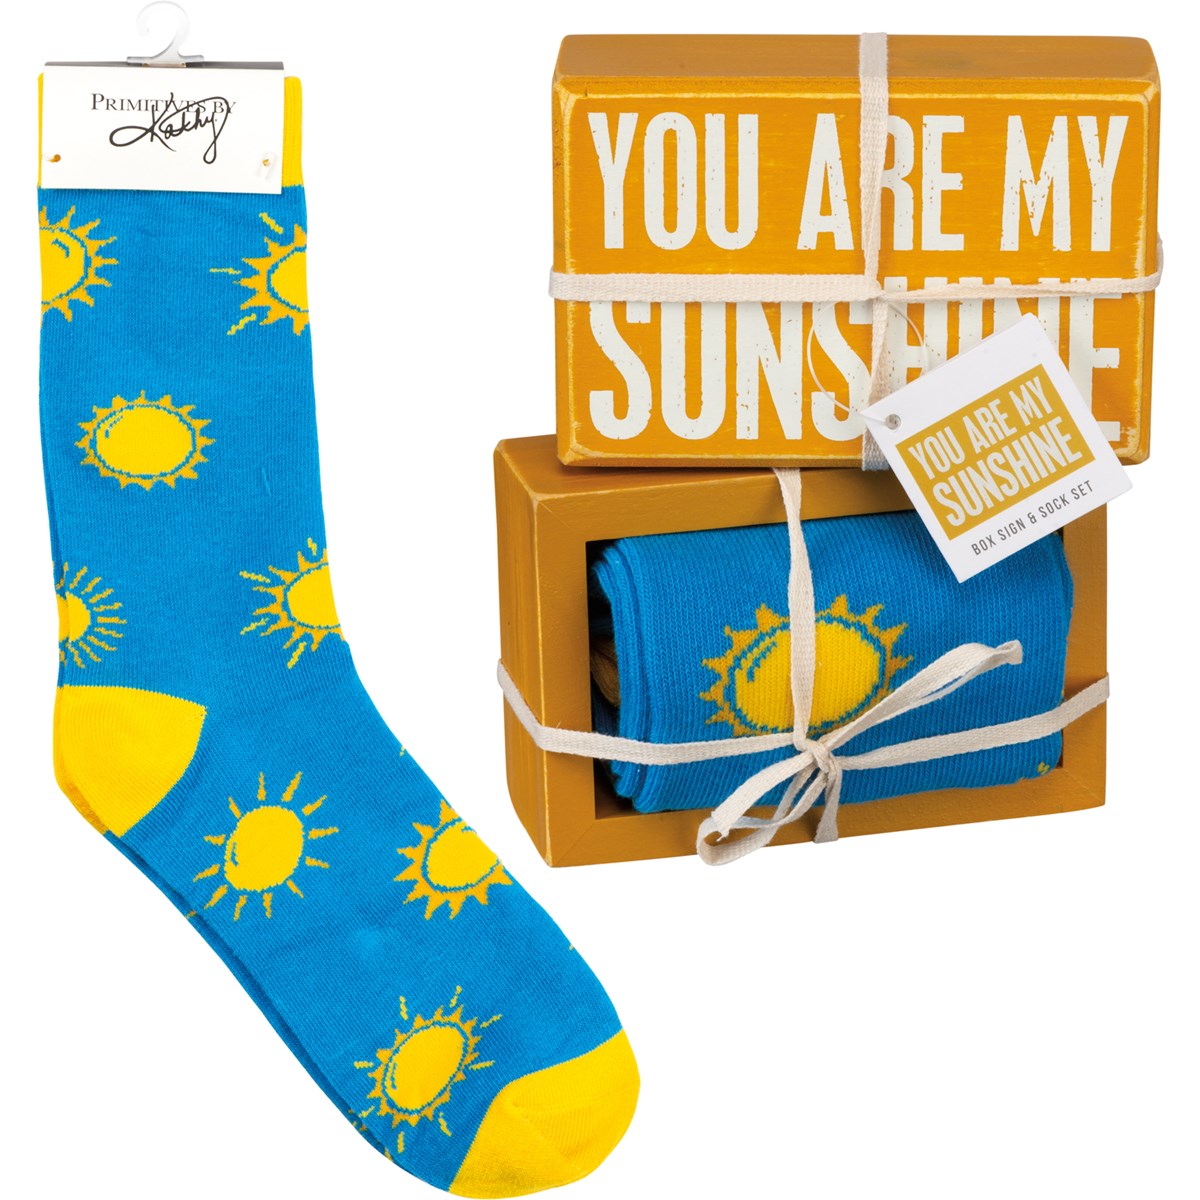 Box Sign & Sock Set - You Are My Sunshine - Box Sign: 4.50" x 3" x 1.75", Socks: One Size Fits Most - Wood, Cotton, Nylon, Spandex, Ribbon